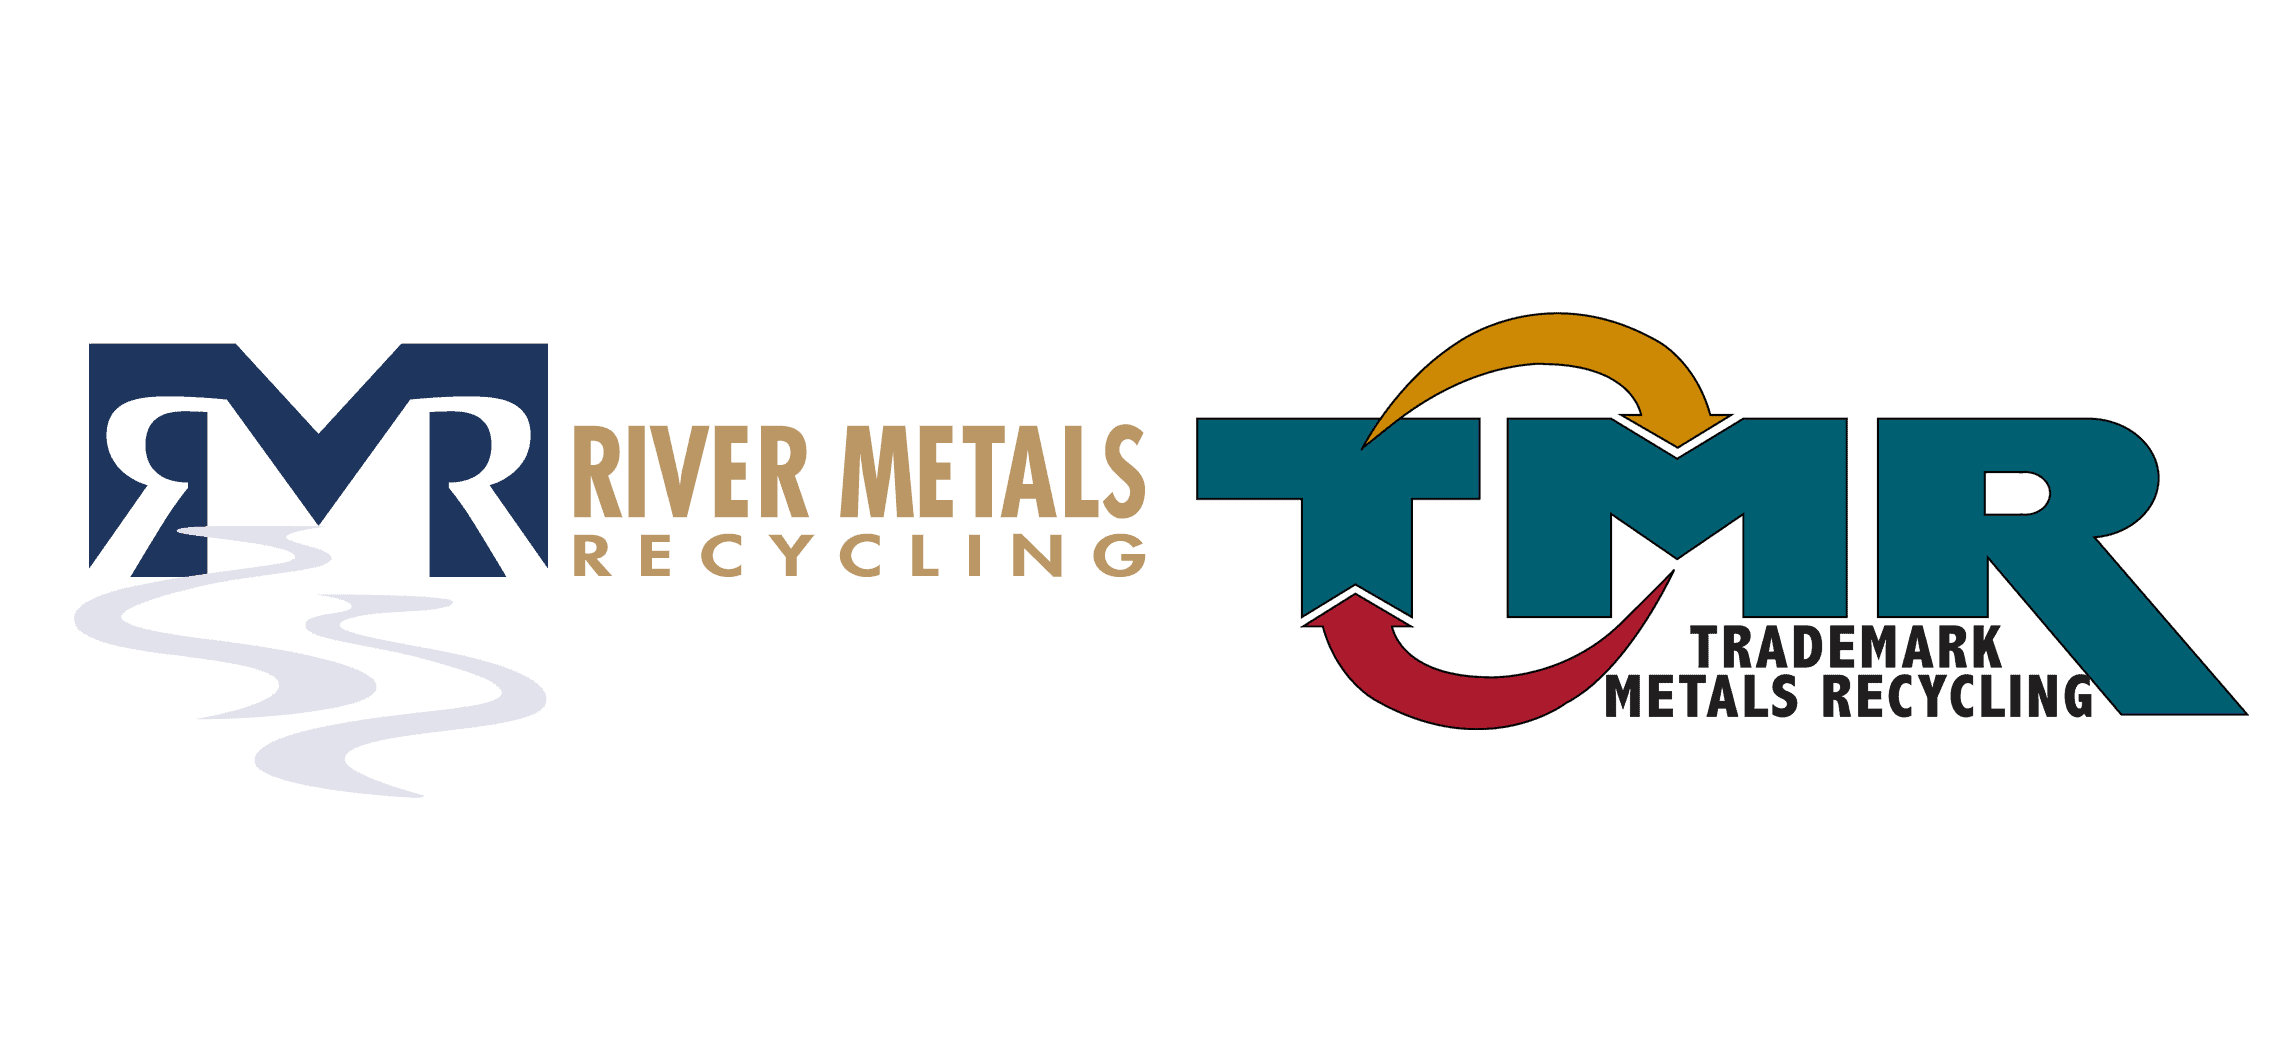 river metals recycling and trademark metals recycling logos